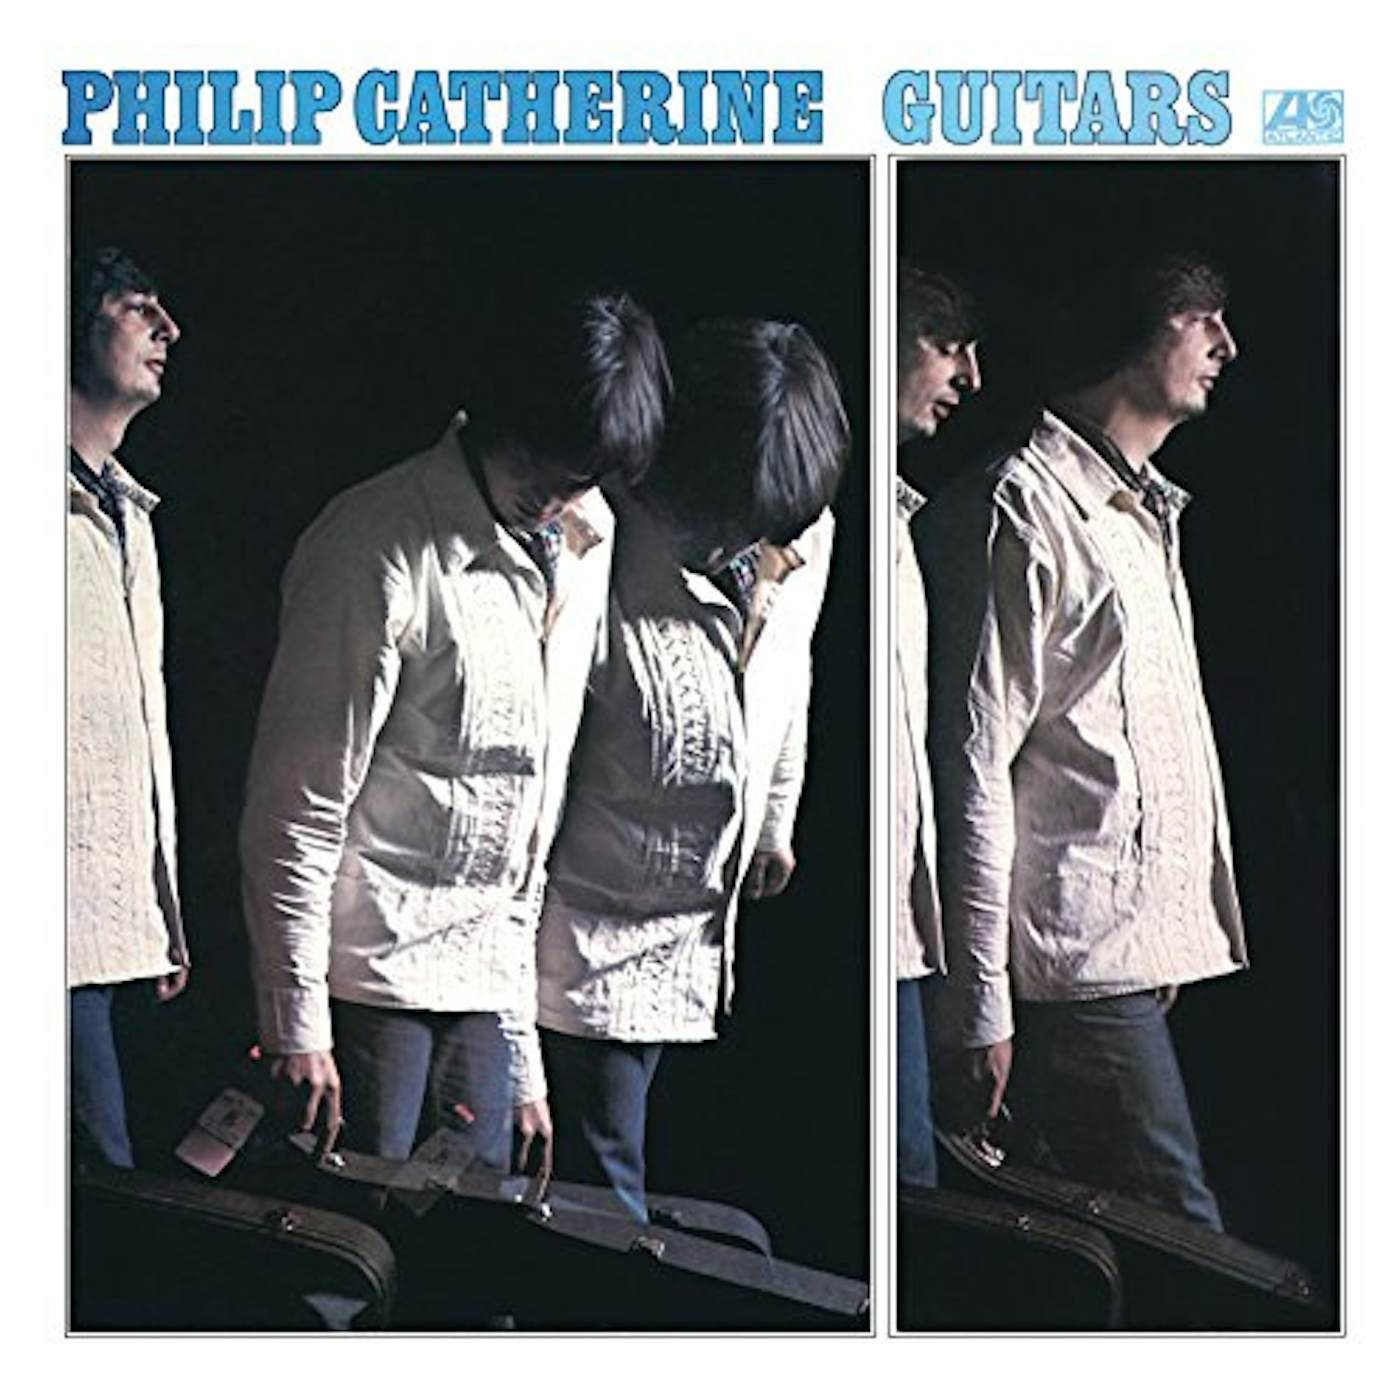 Philip Catherine September Man Vinyl Record